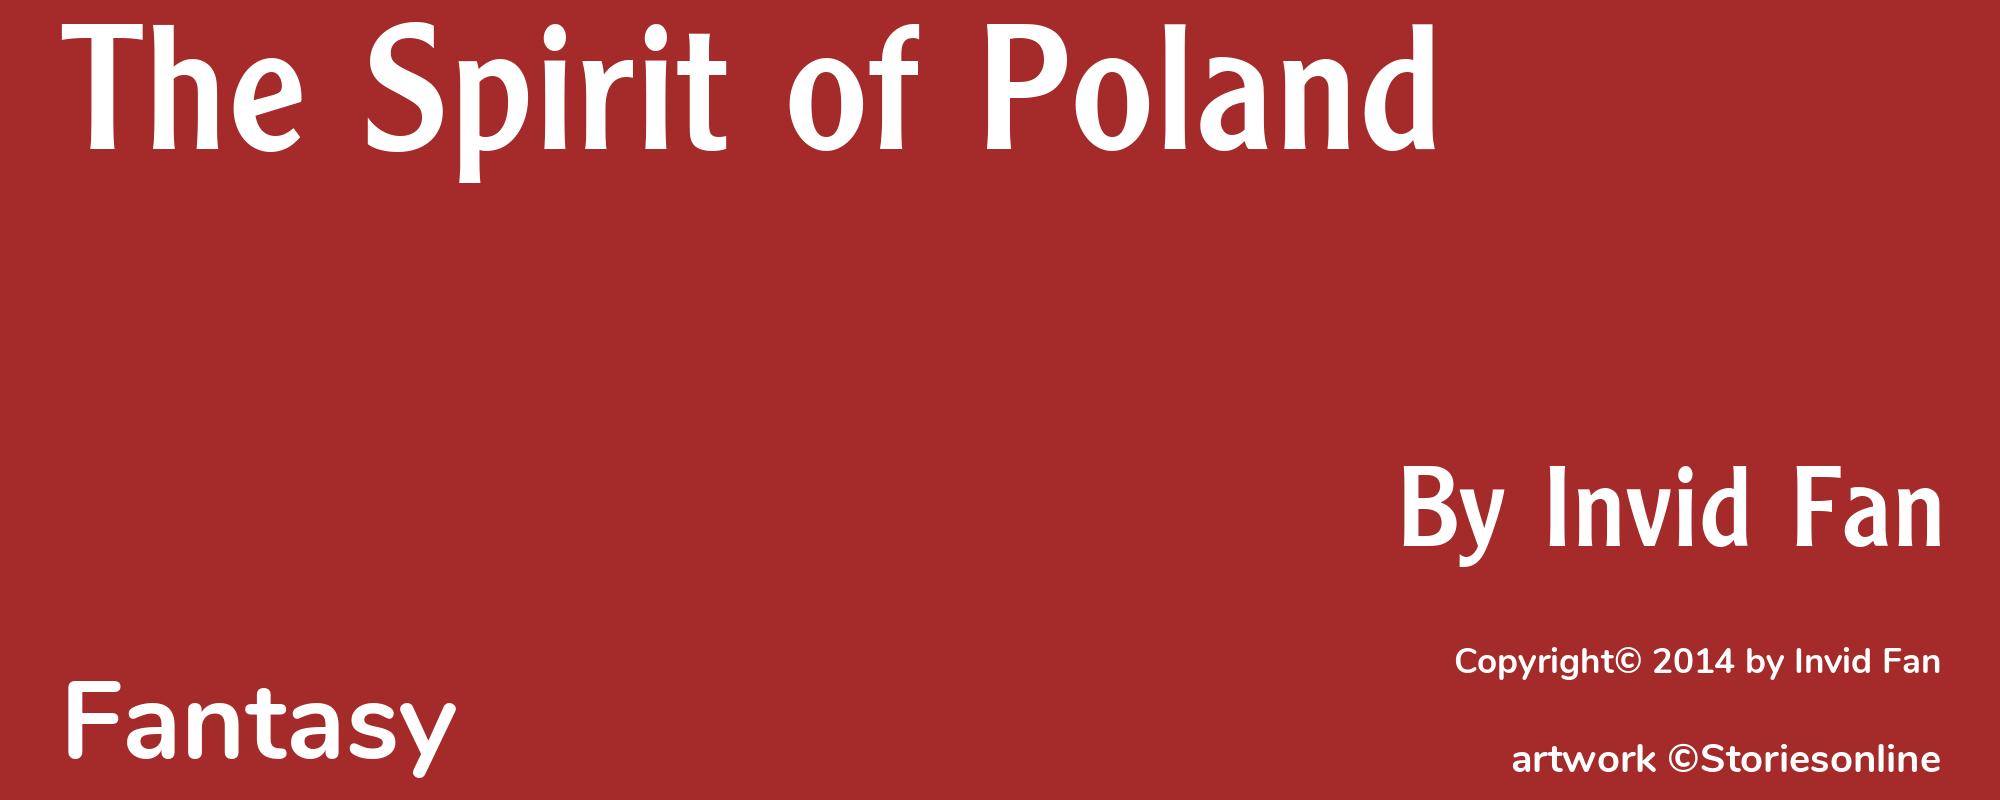 The Spirit of Poland - Cover